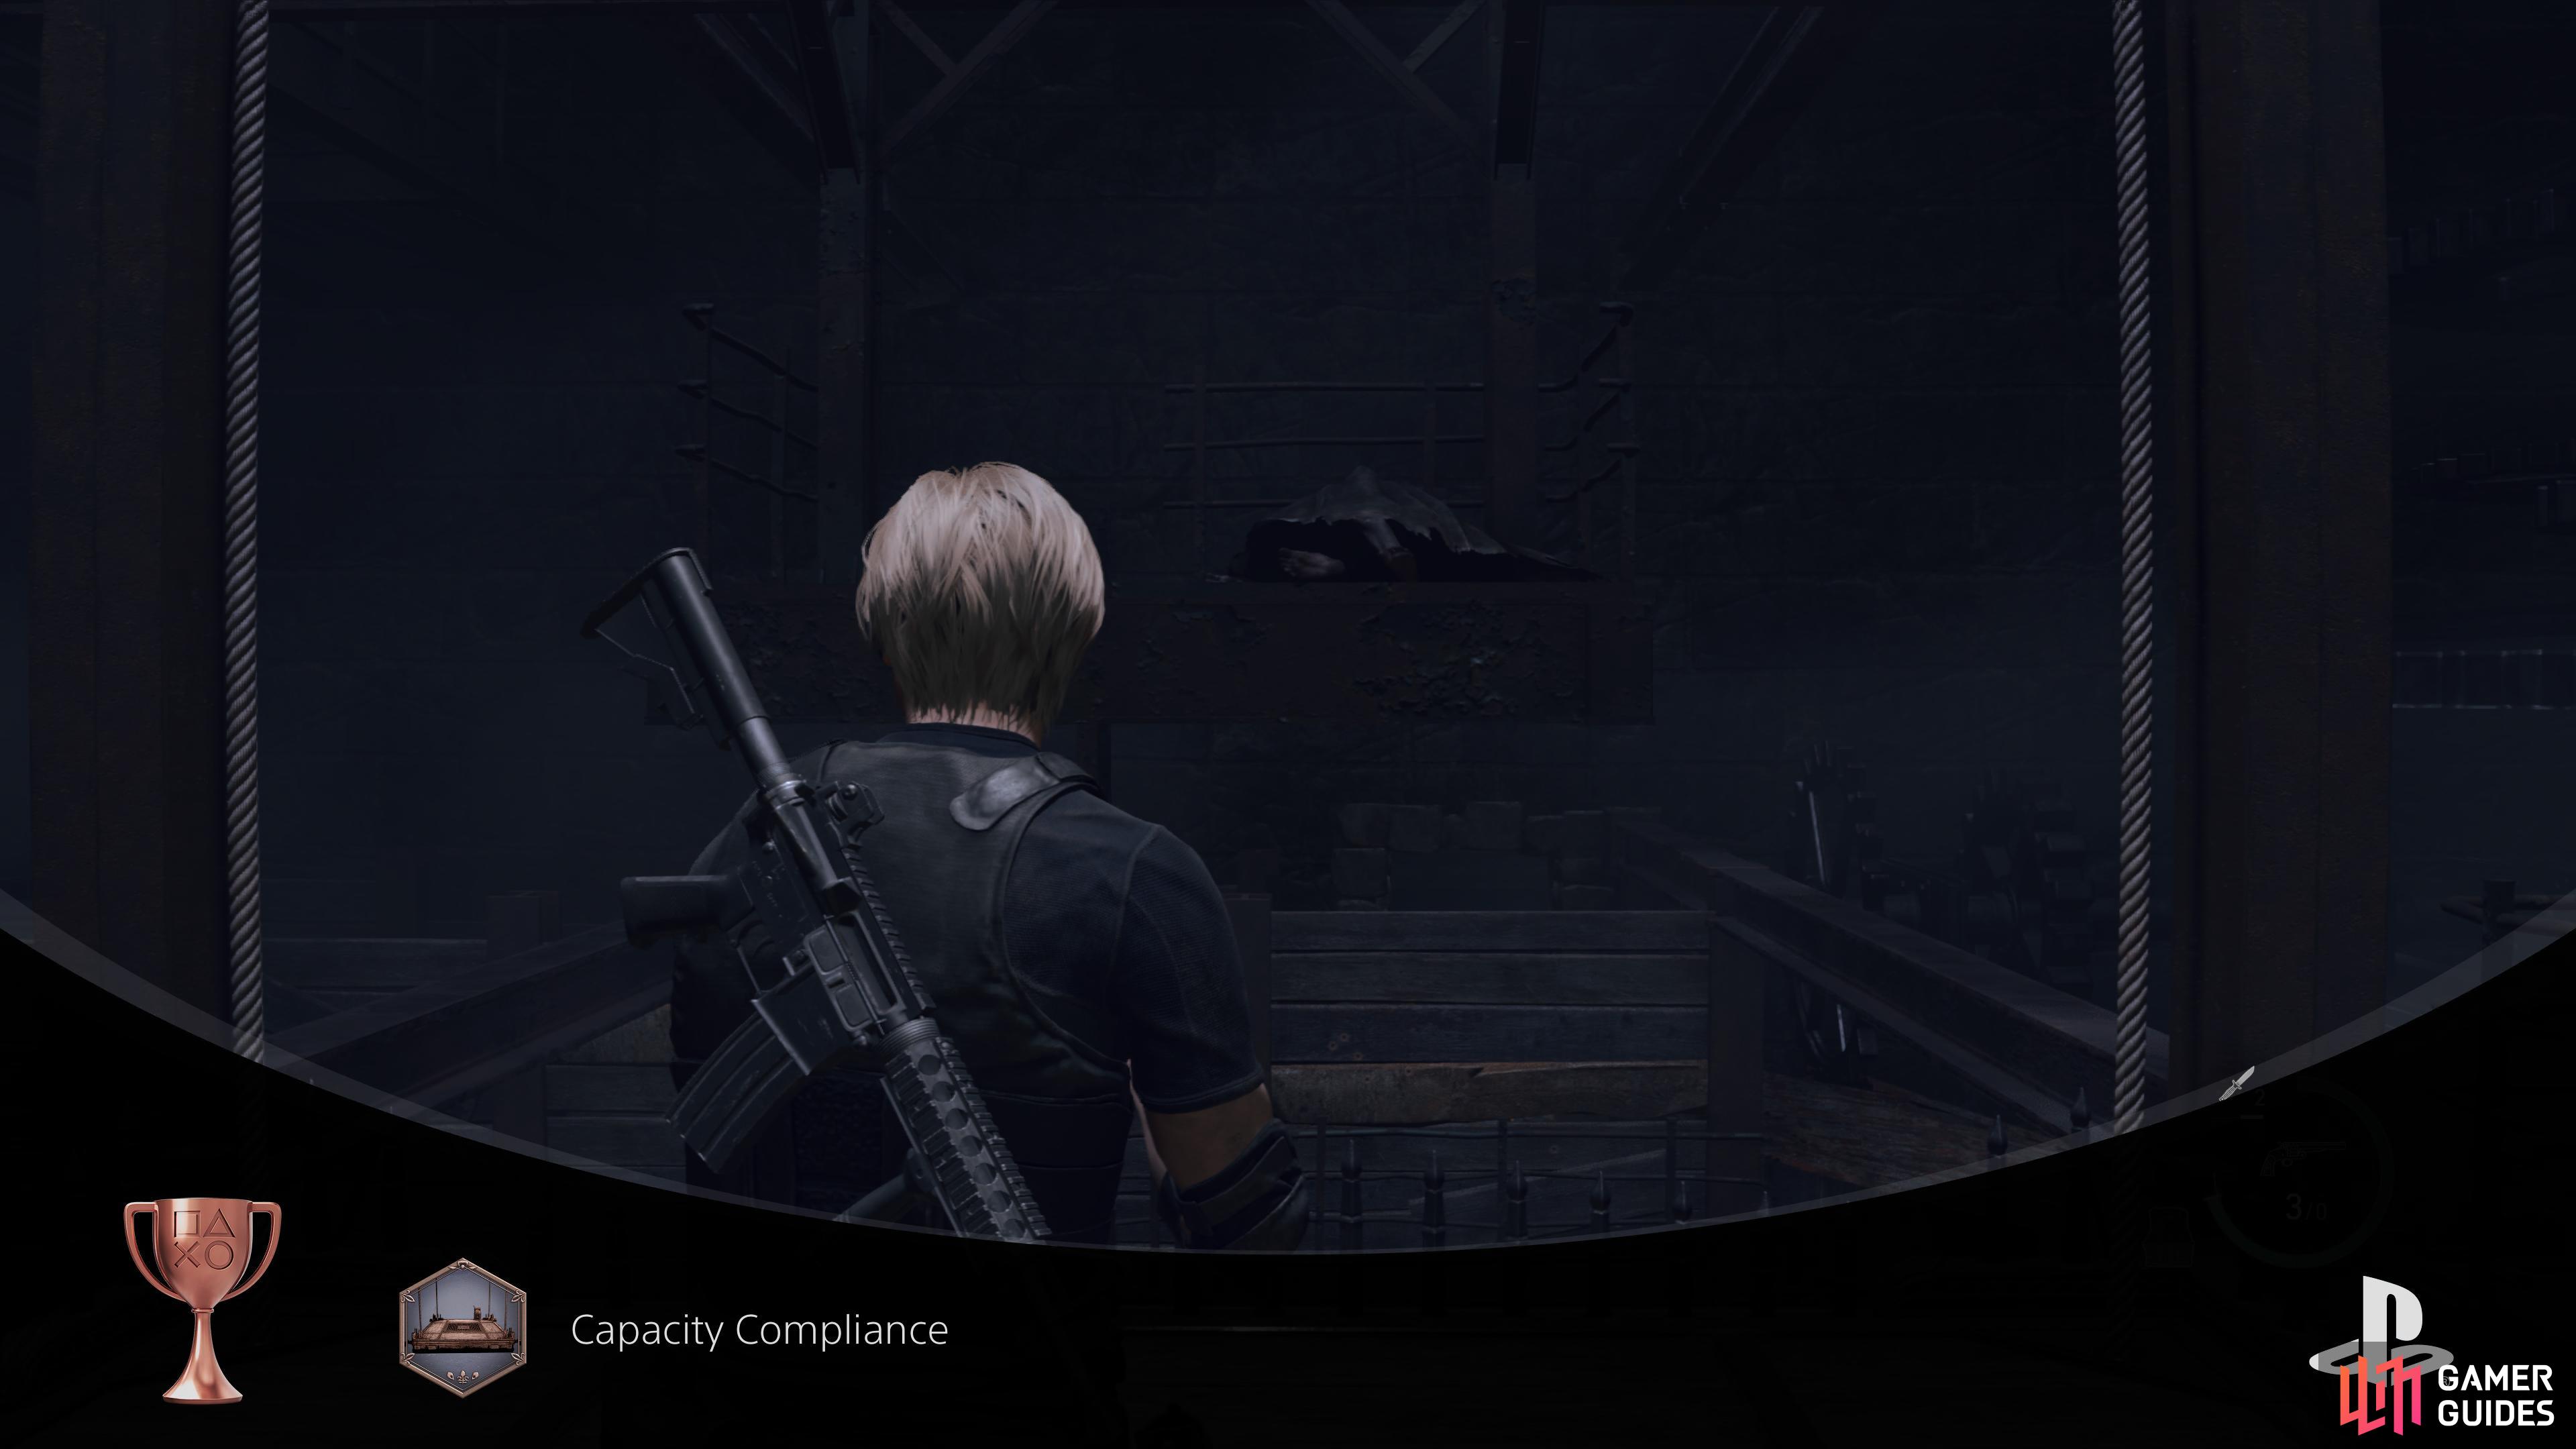 COLUMN: 'Resident Evil 4' remake still one of best games ever